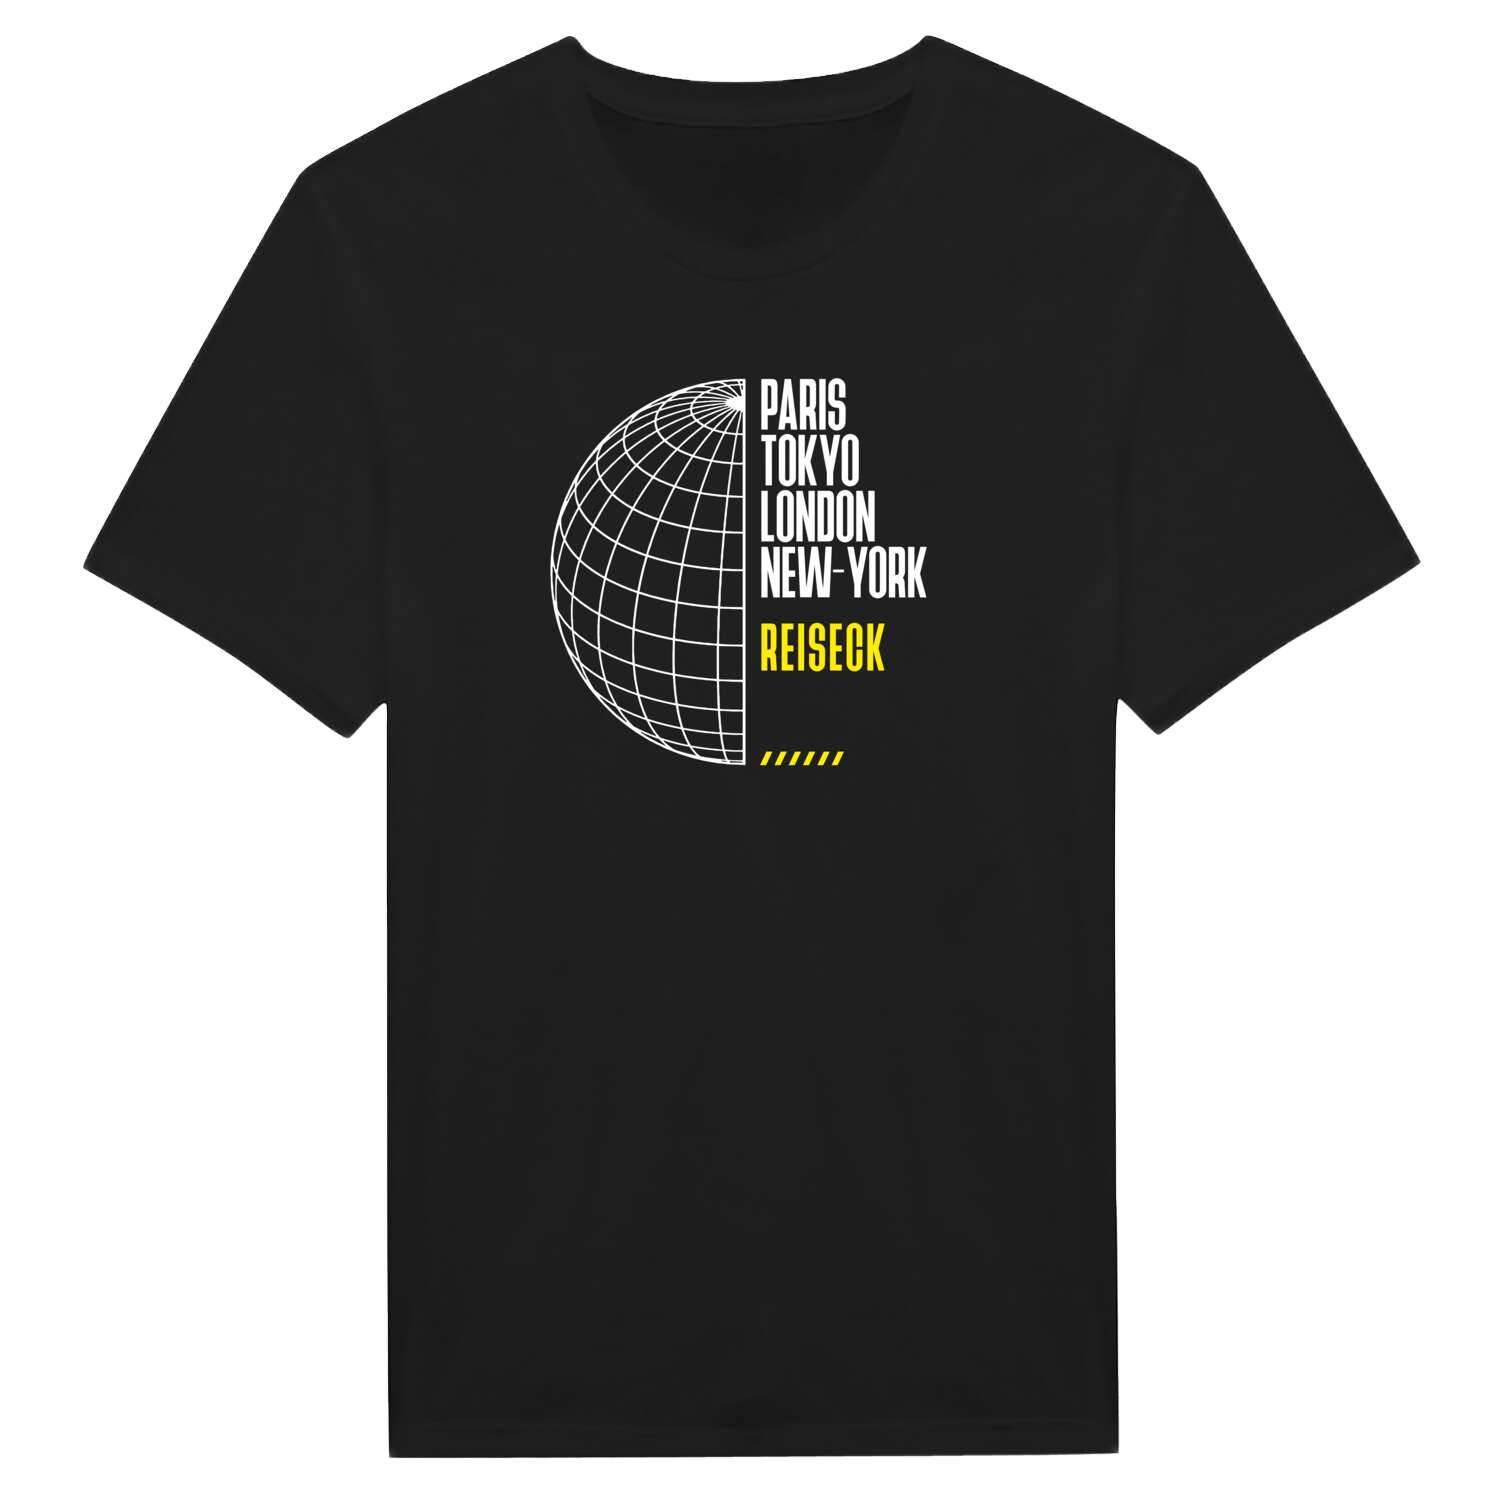 Reiseck T-Shirt »Paris Tokyo London«